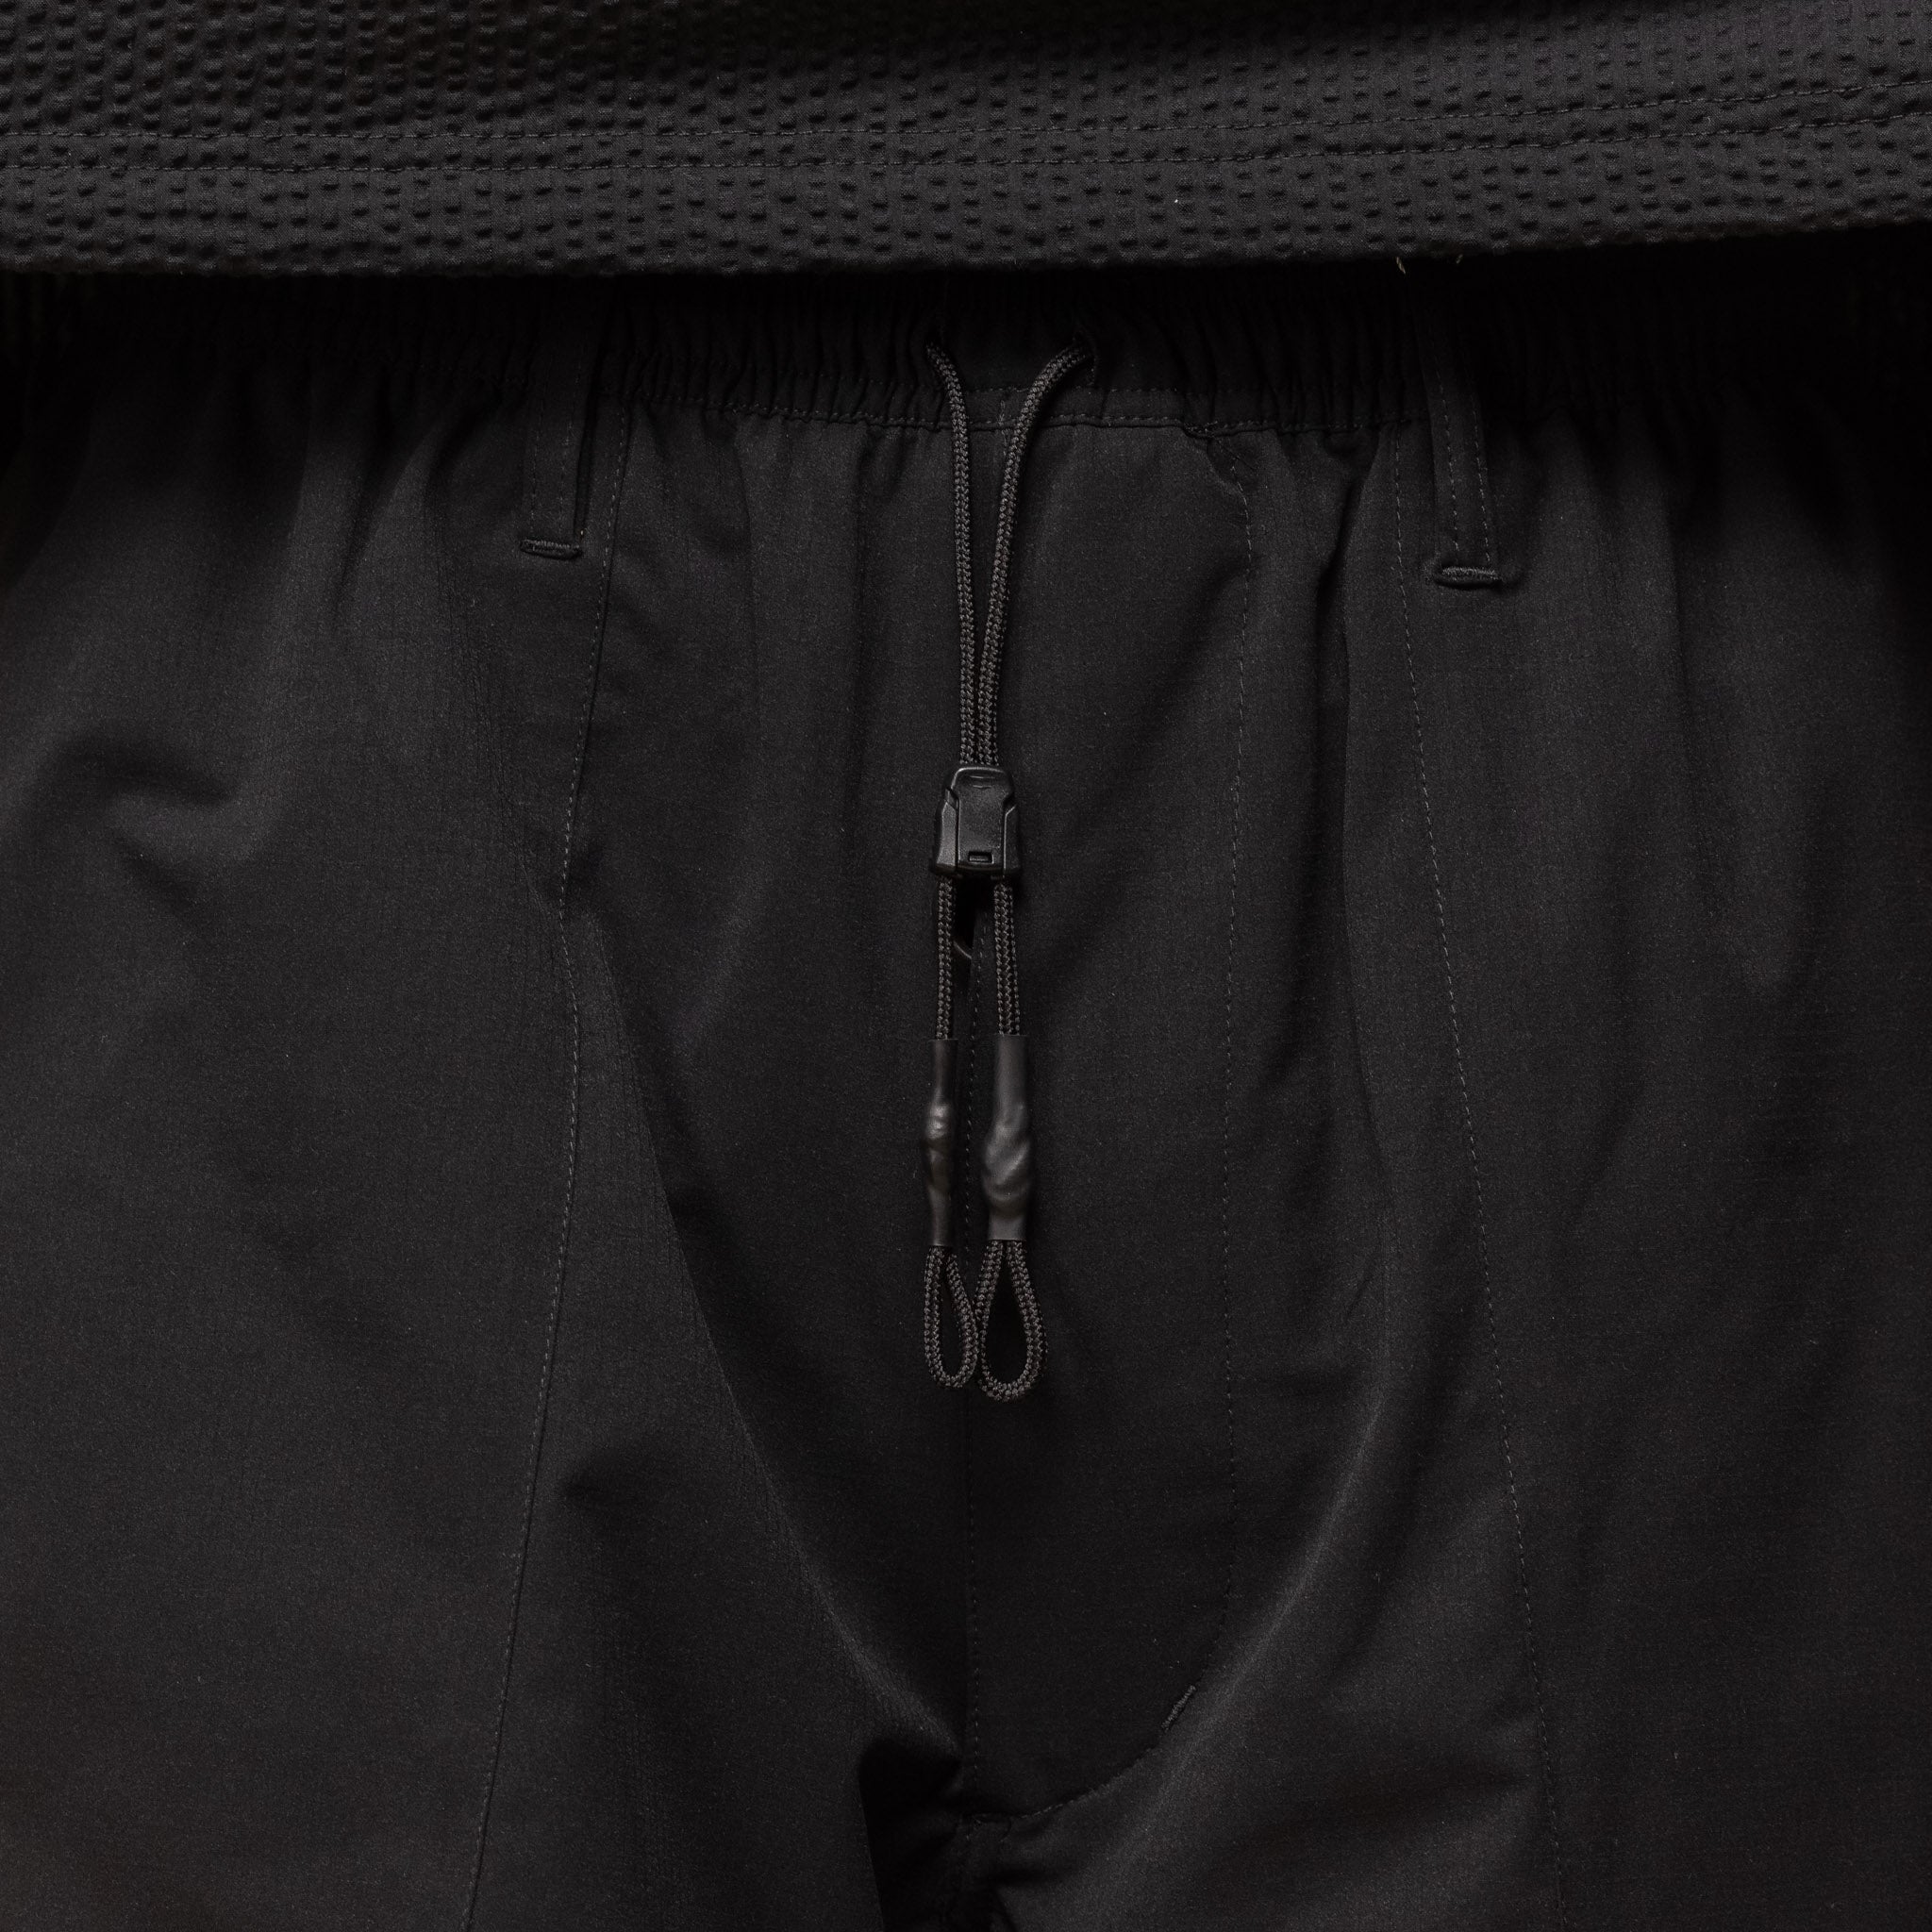 CMF Outdoor Garment - New Bug Shorts - Black